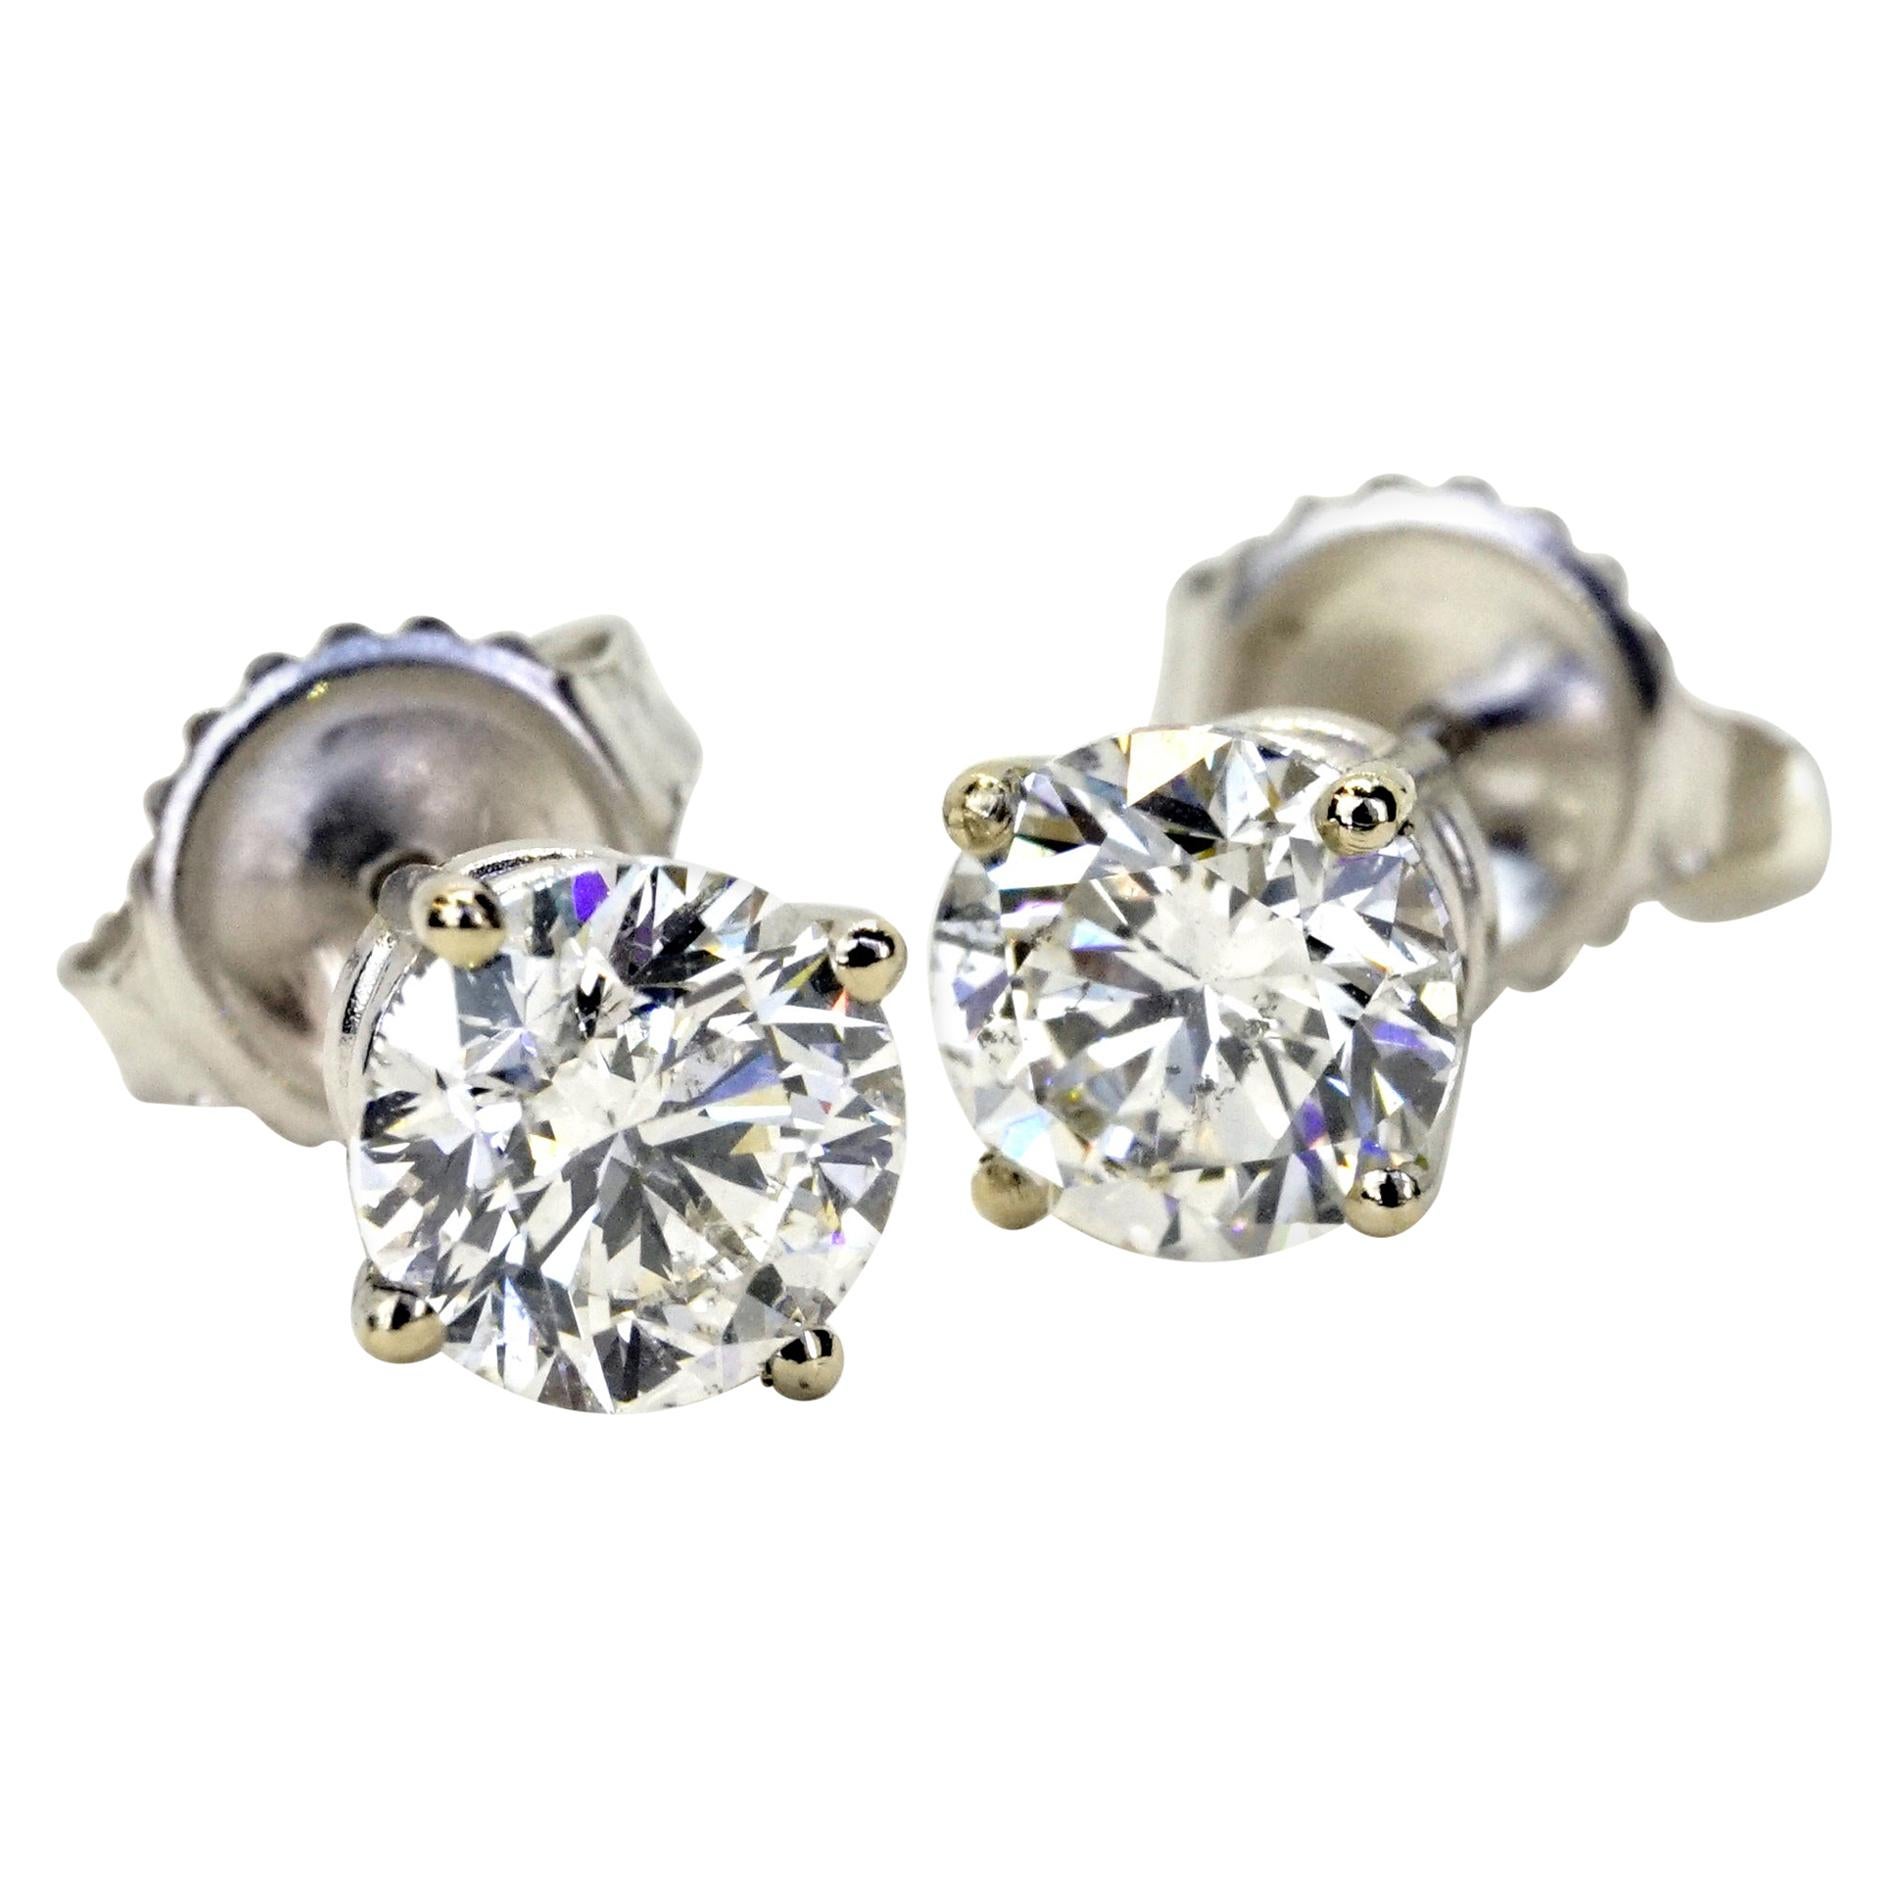 1.10 Carats Total Diamond Stud Earrings For Sale